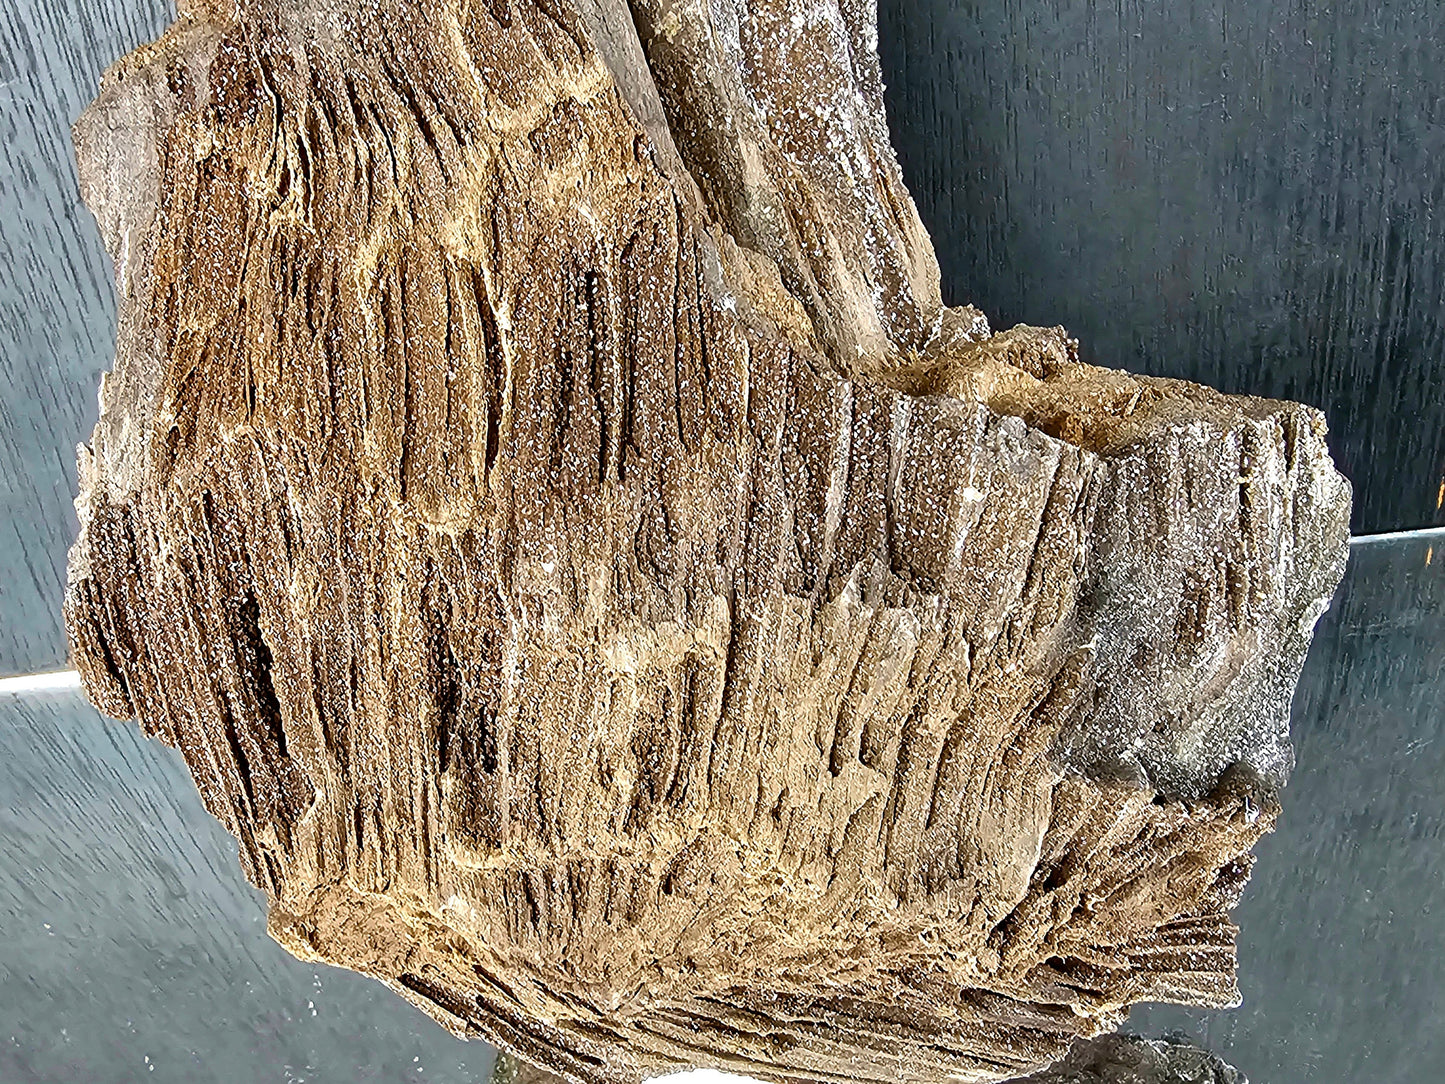 Fossil Wood Quartz Crystal Druze Rare Petrified Wood Germany (#9)